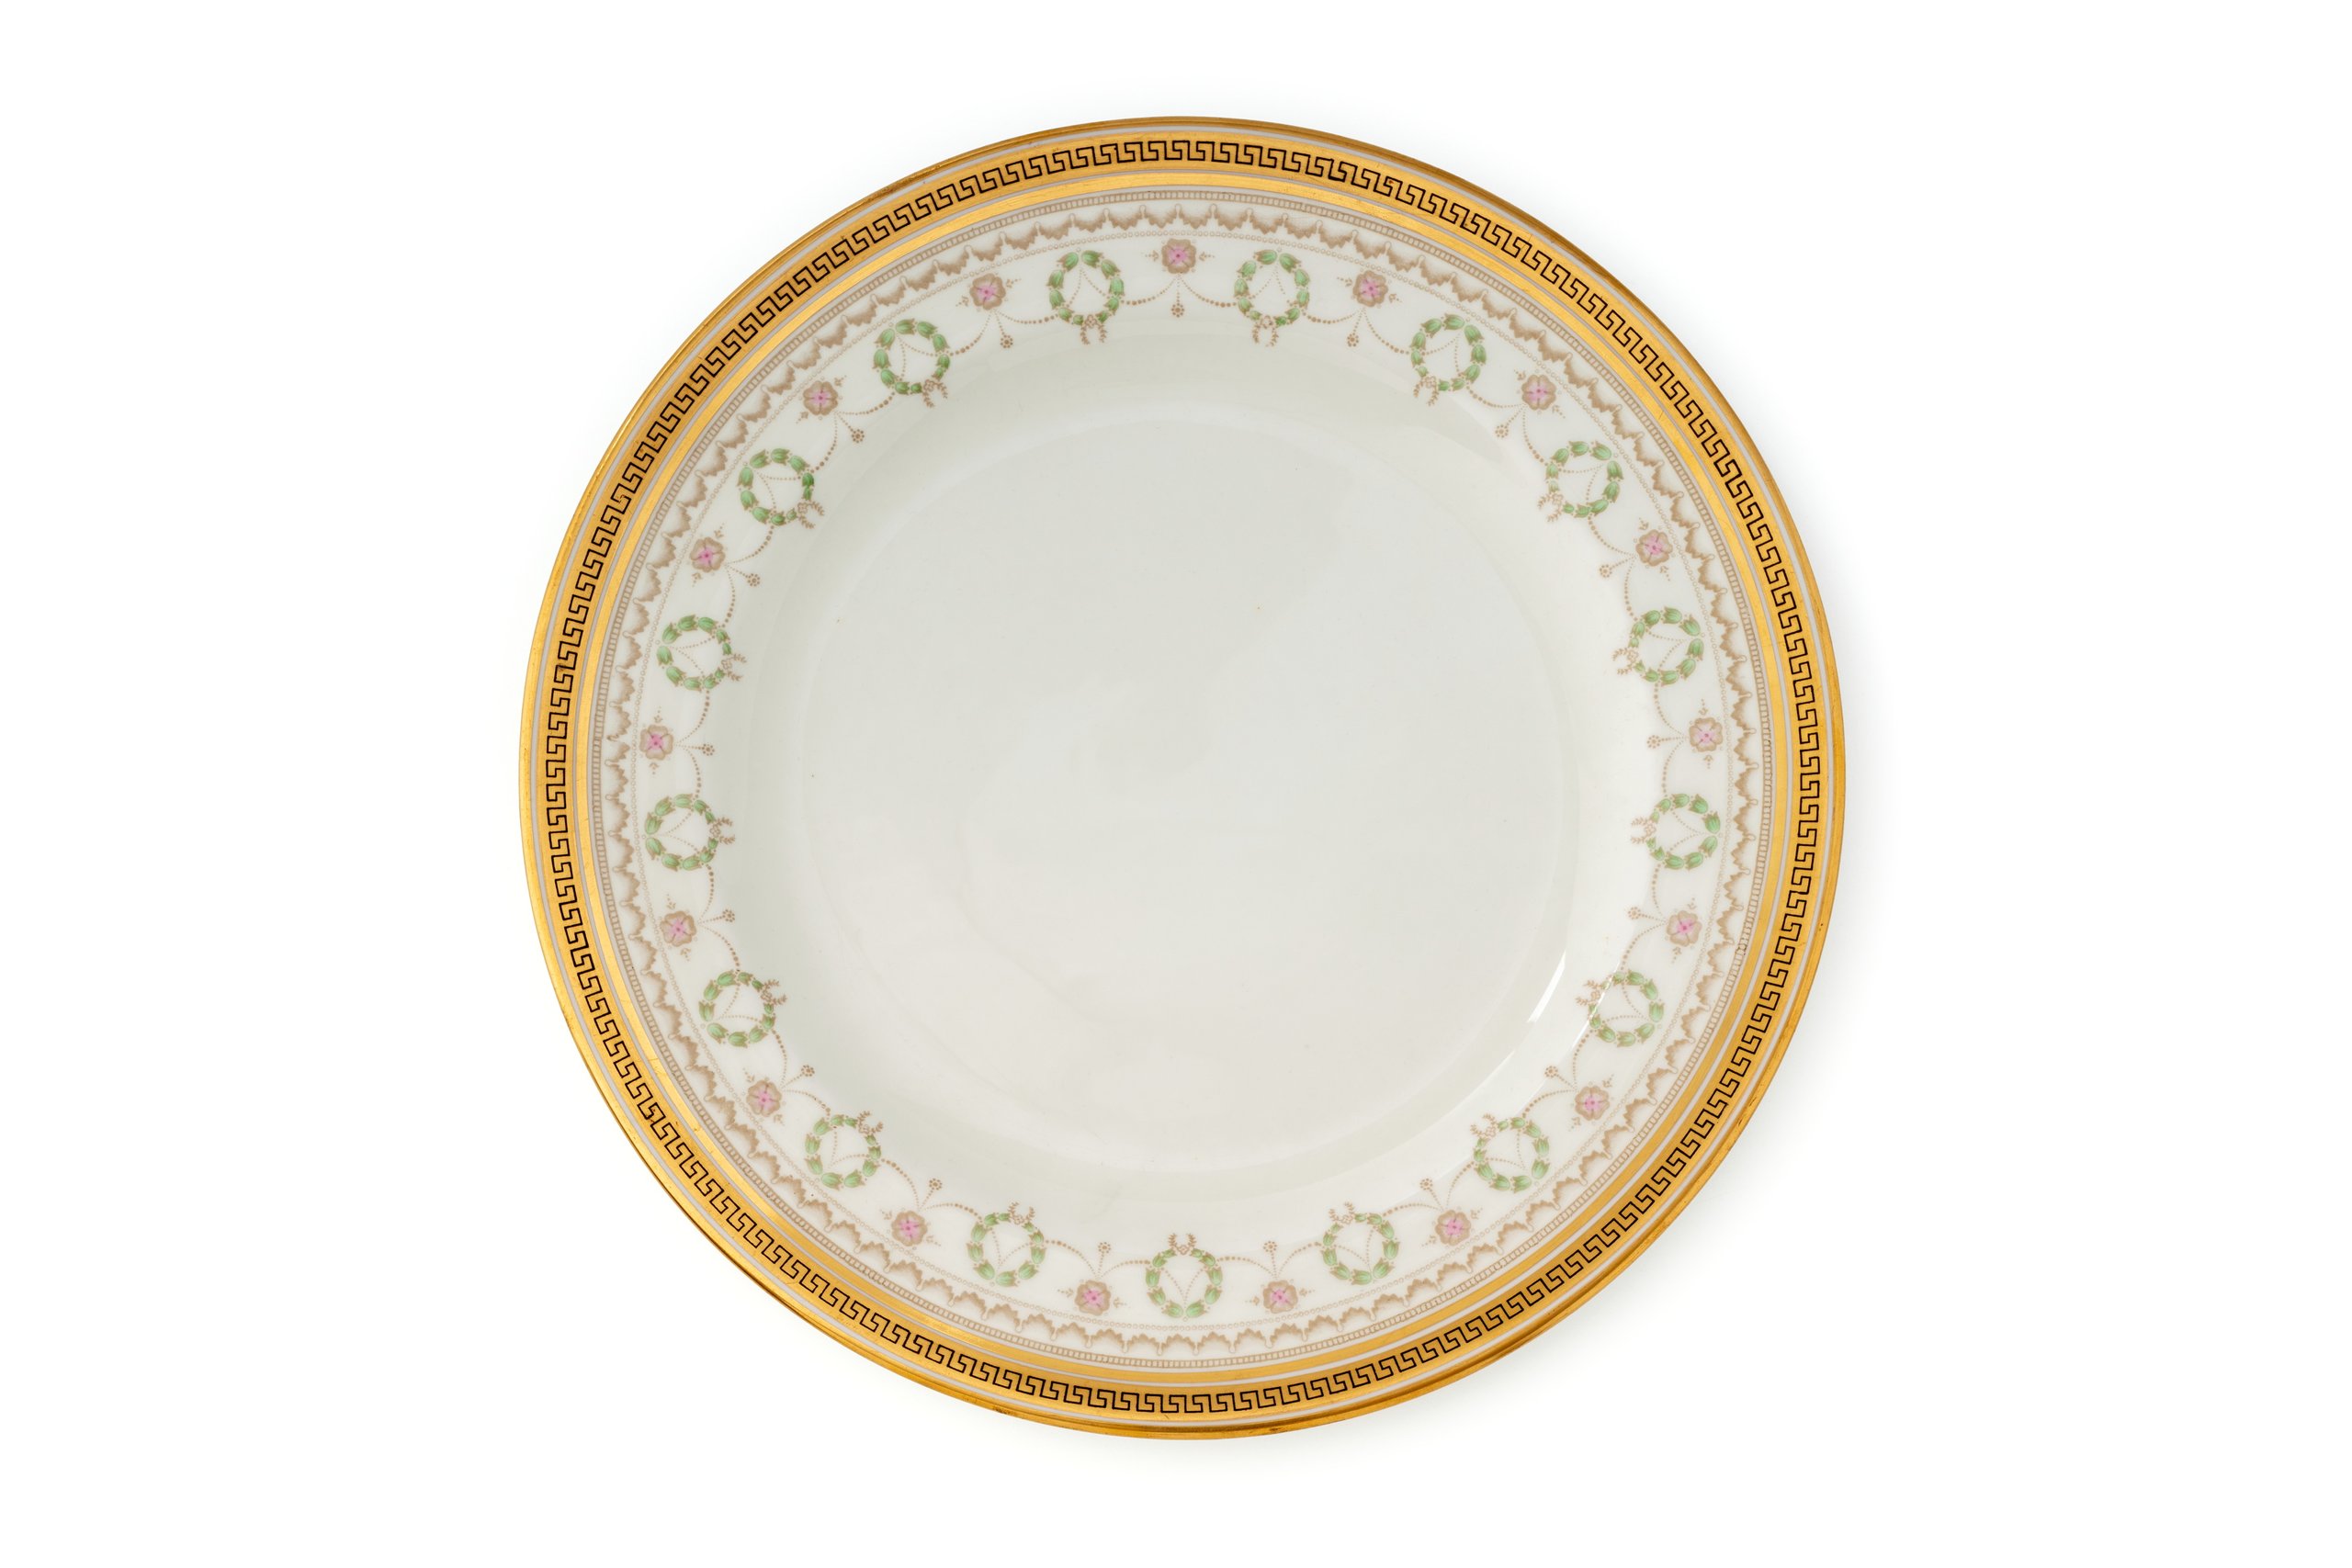 Porcelain plate by Cauldon Ltd